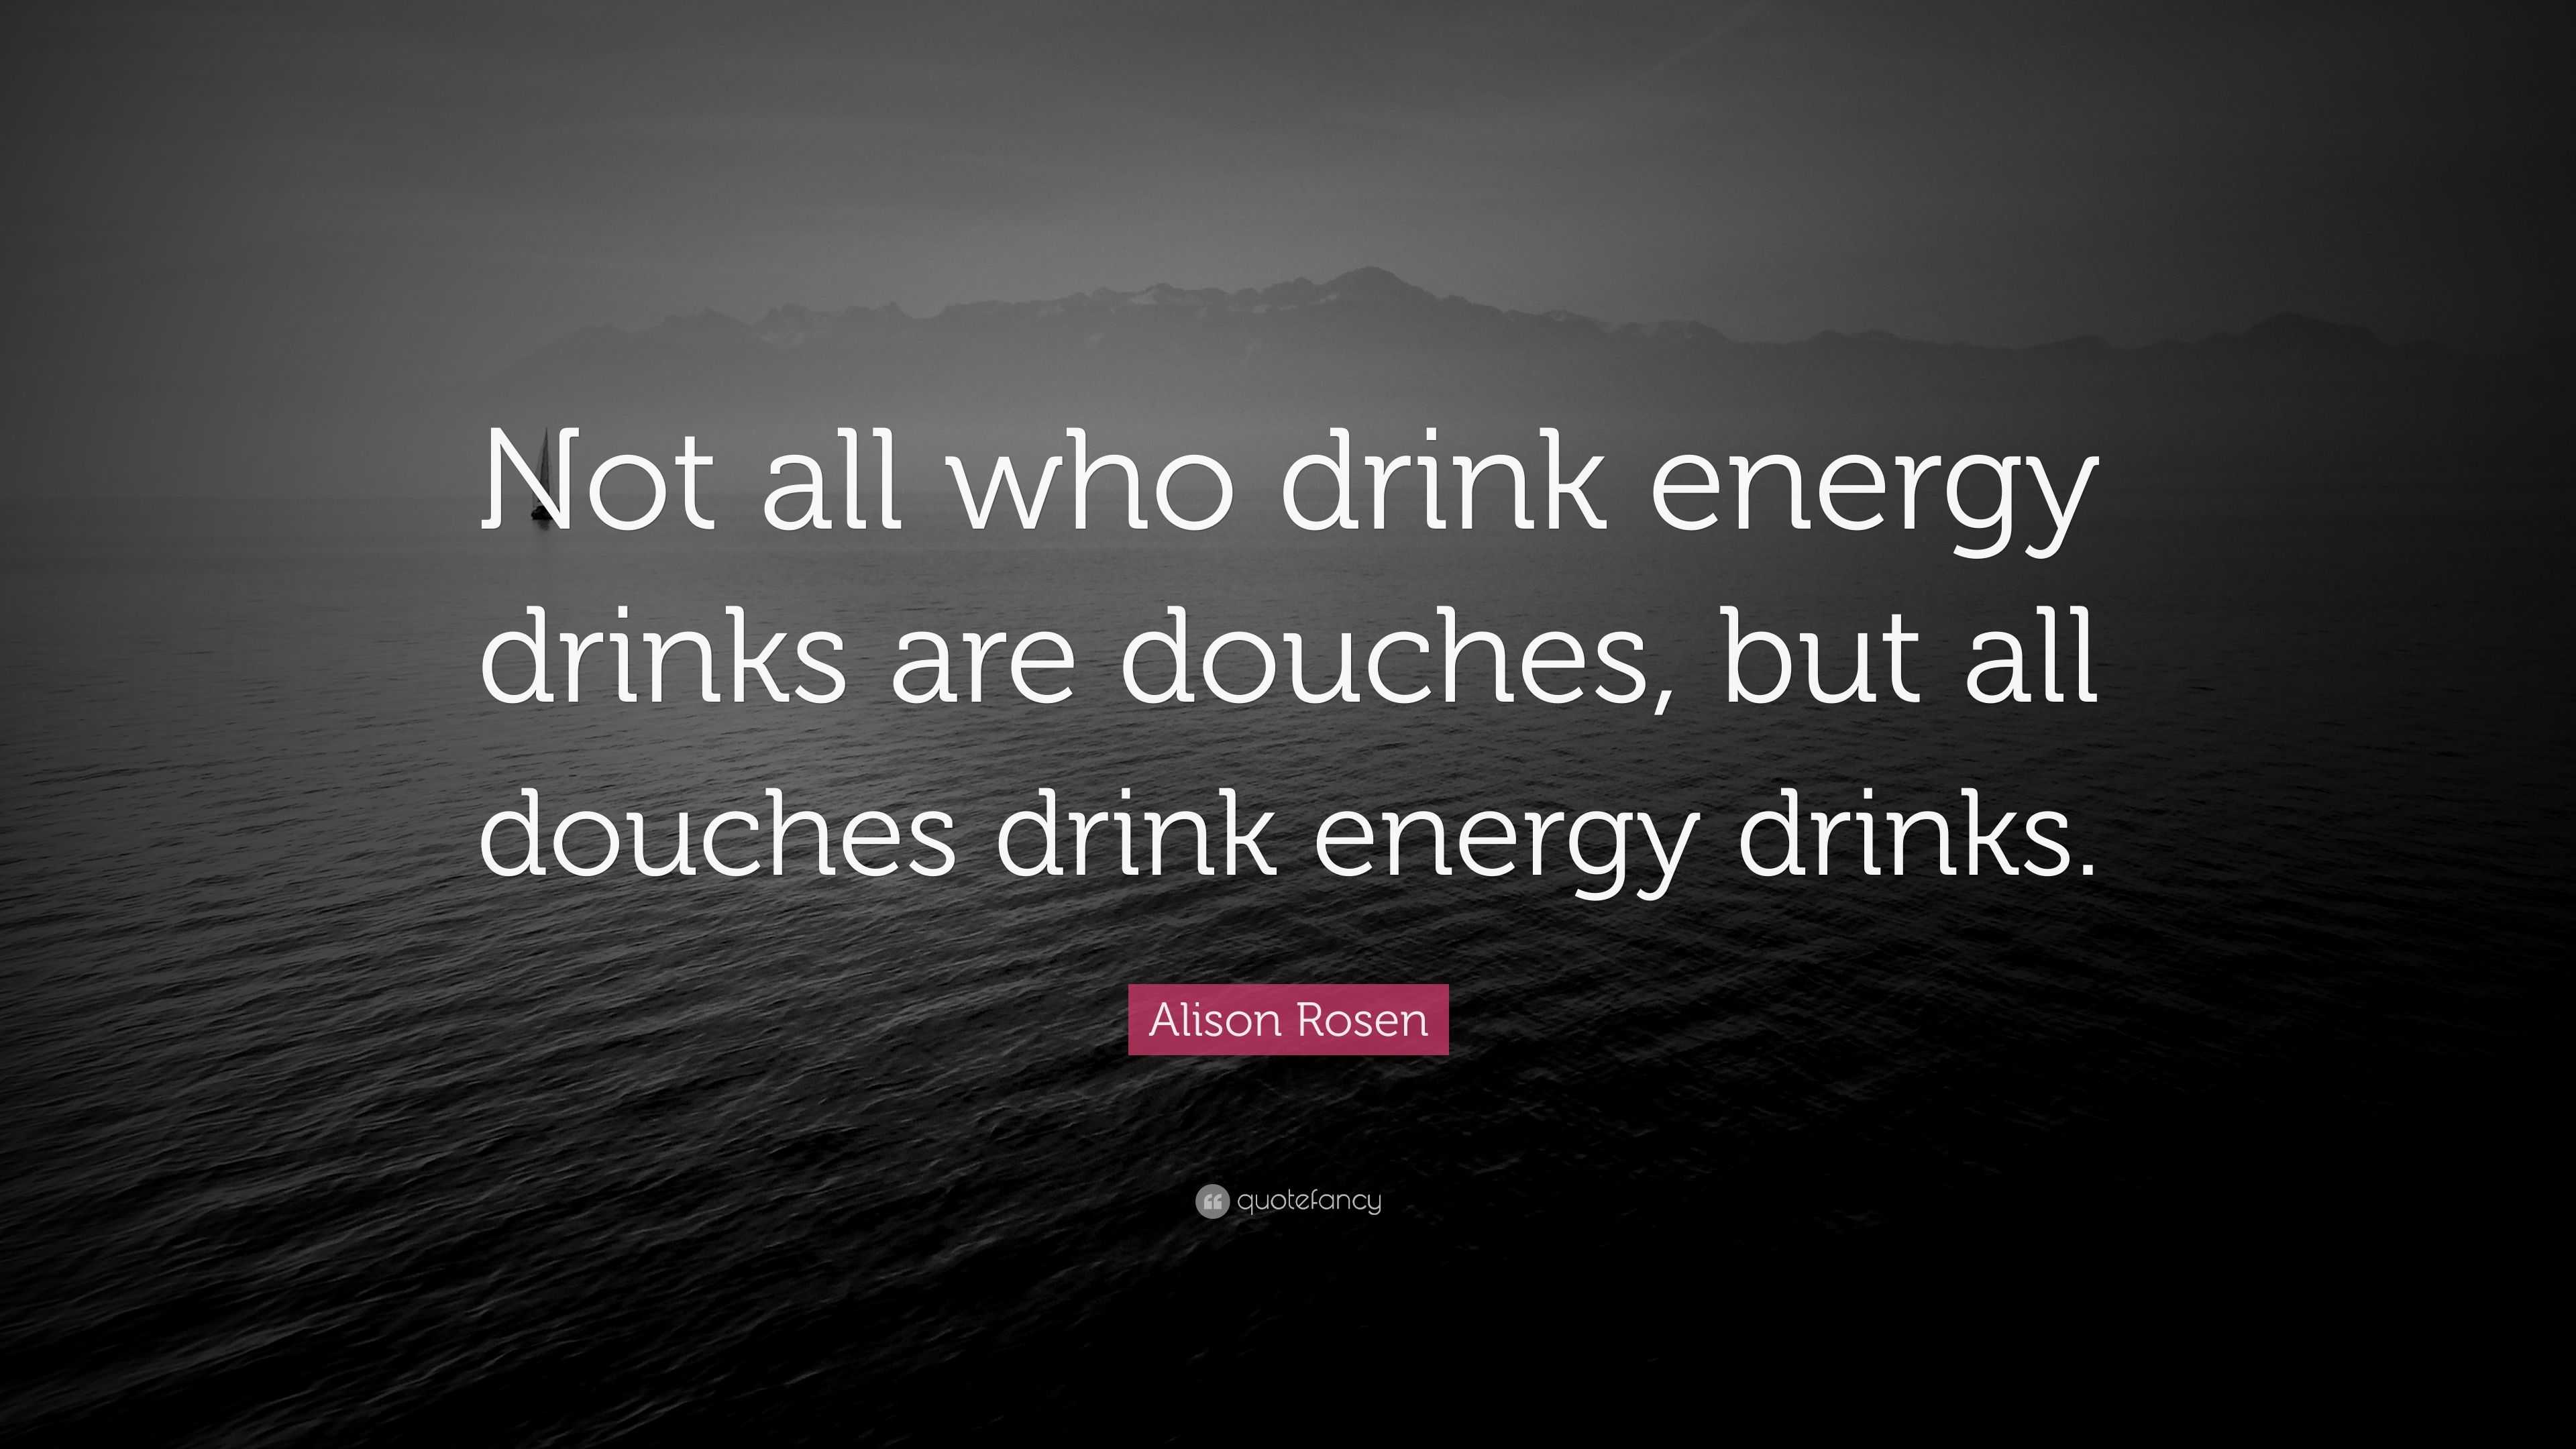 argumentative essay about energy drinks